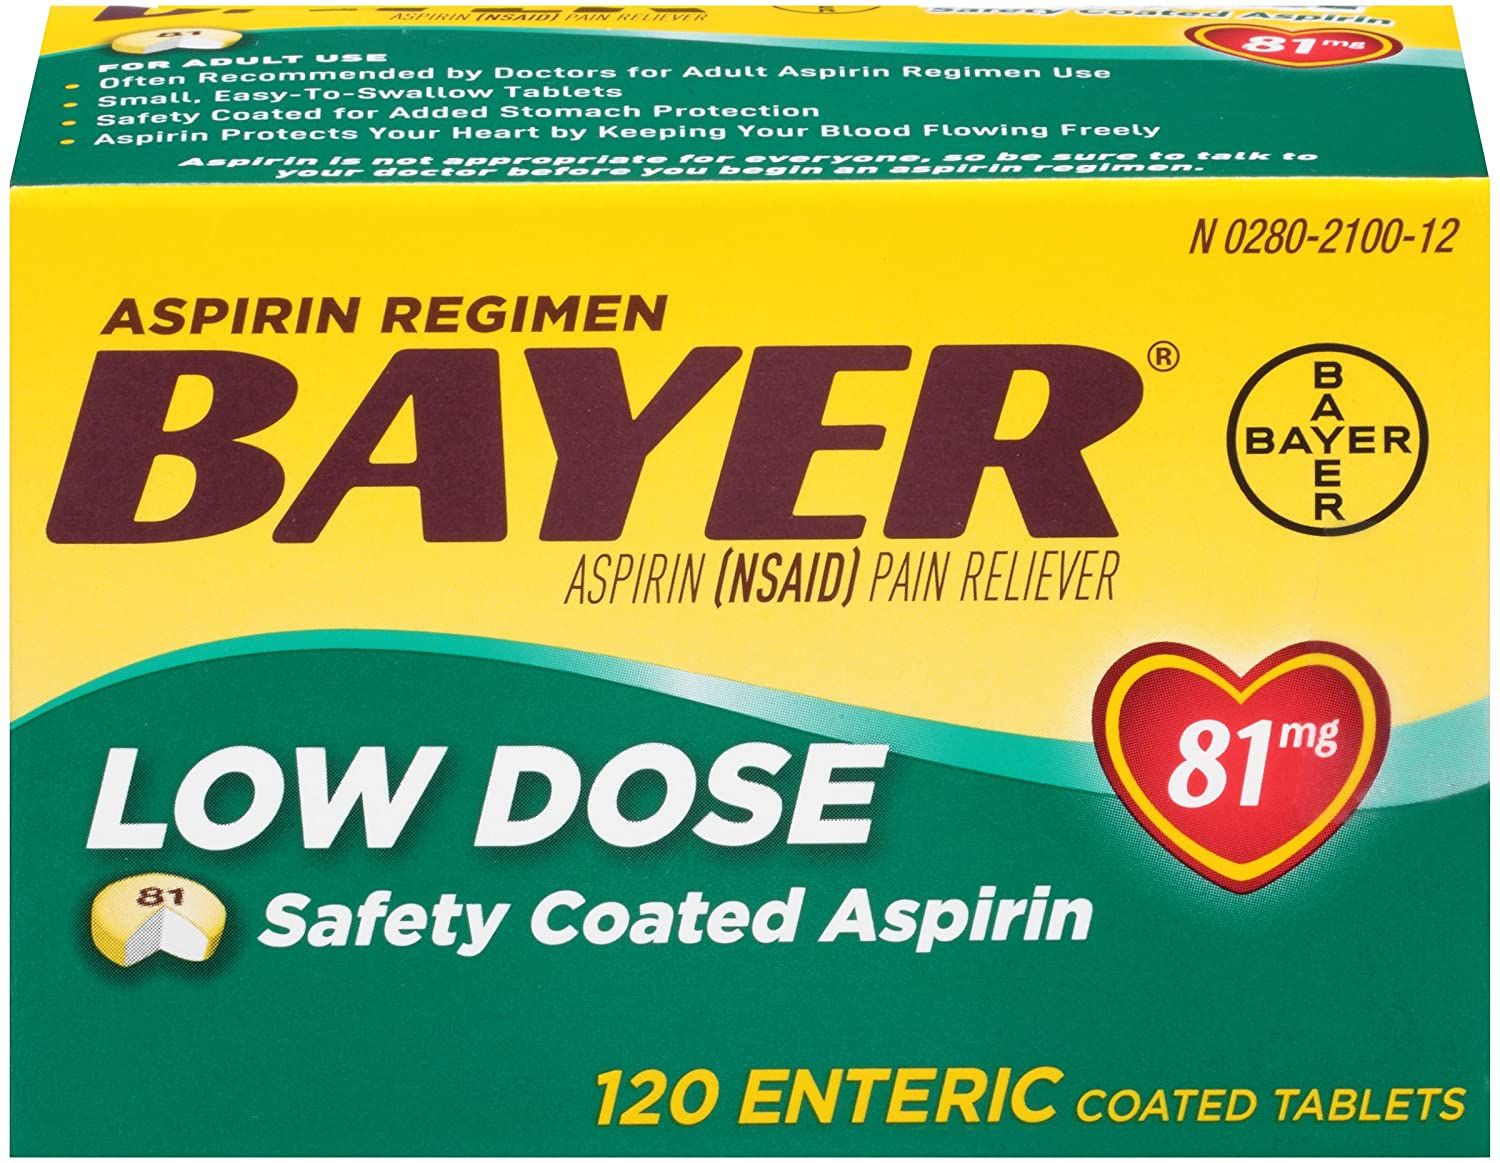 Bayer Low Dose Aspirin Tablets, 81 mg - 120 ct